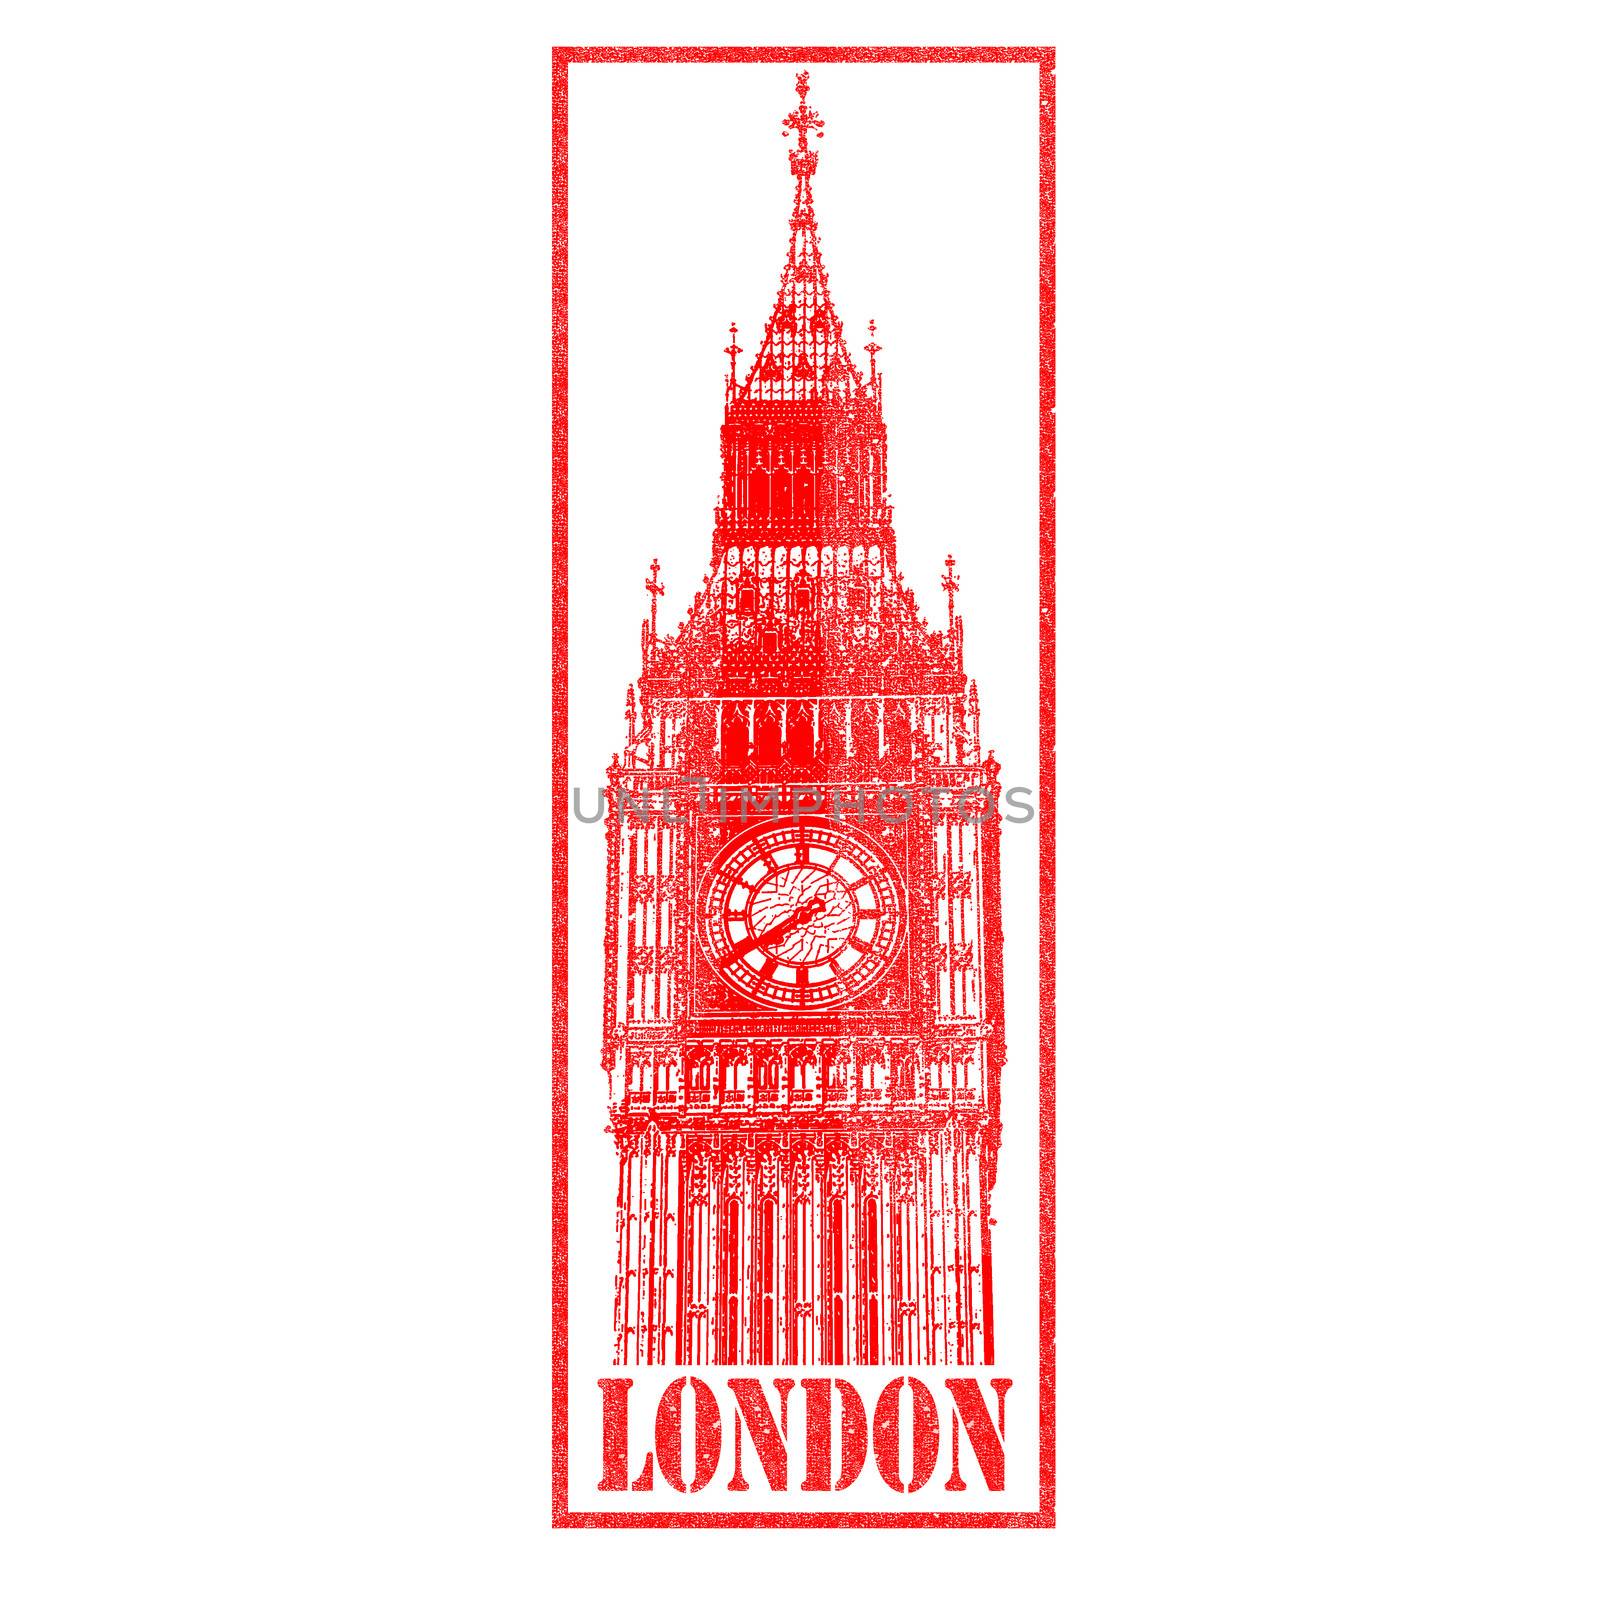 Big Ben/London red rubber Stamp.